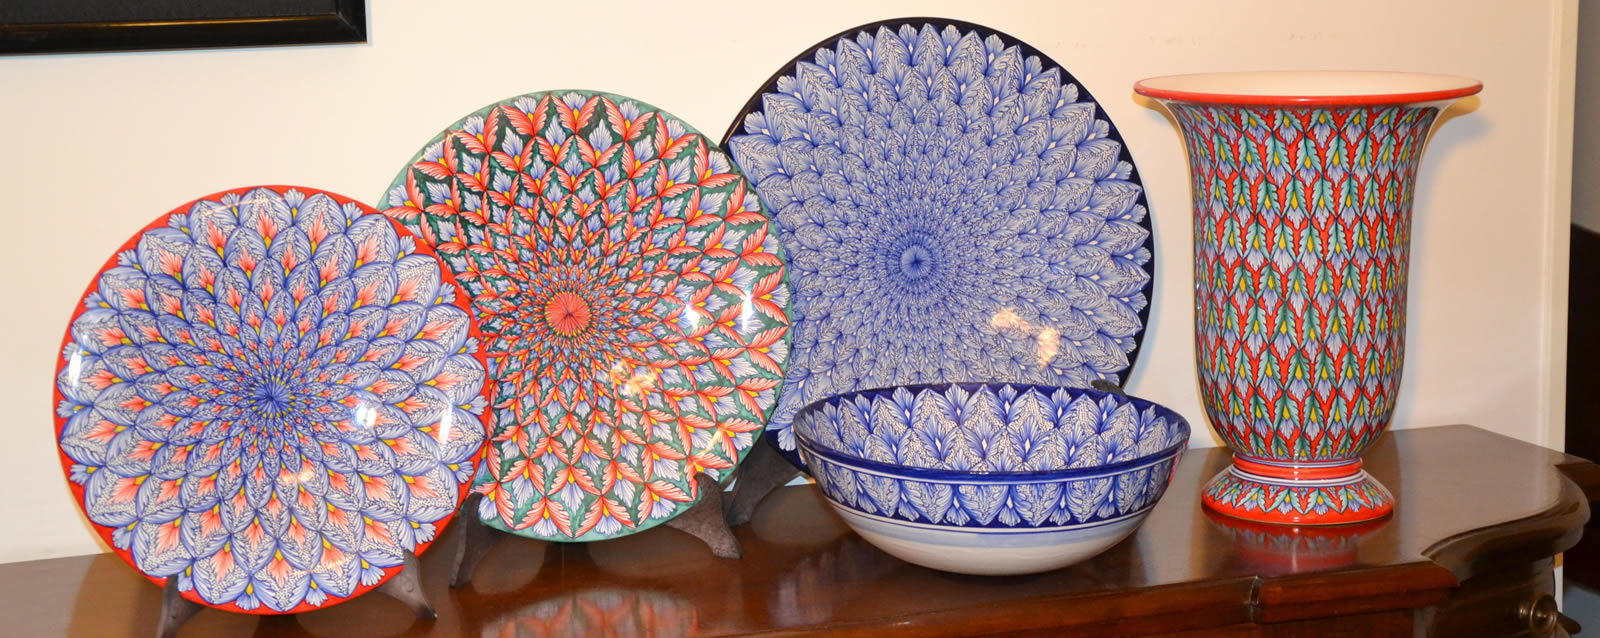 ceramics from Deruta